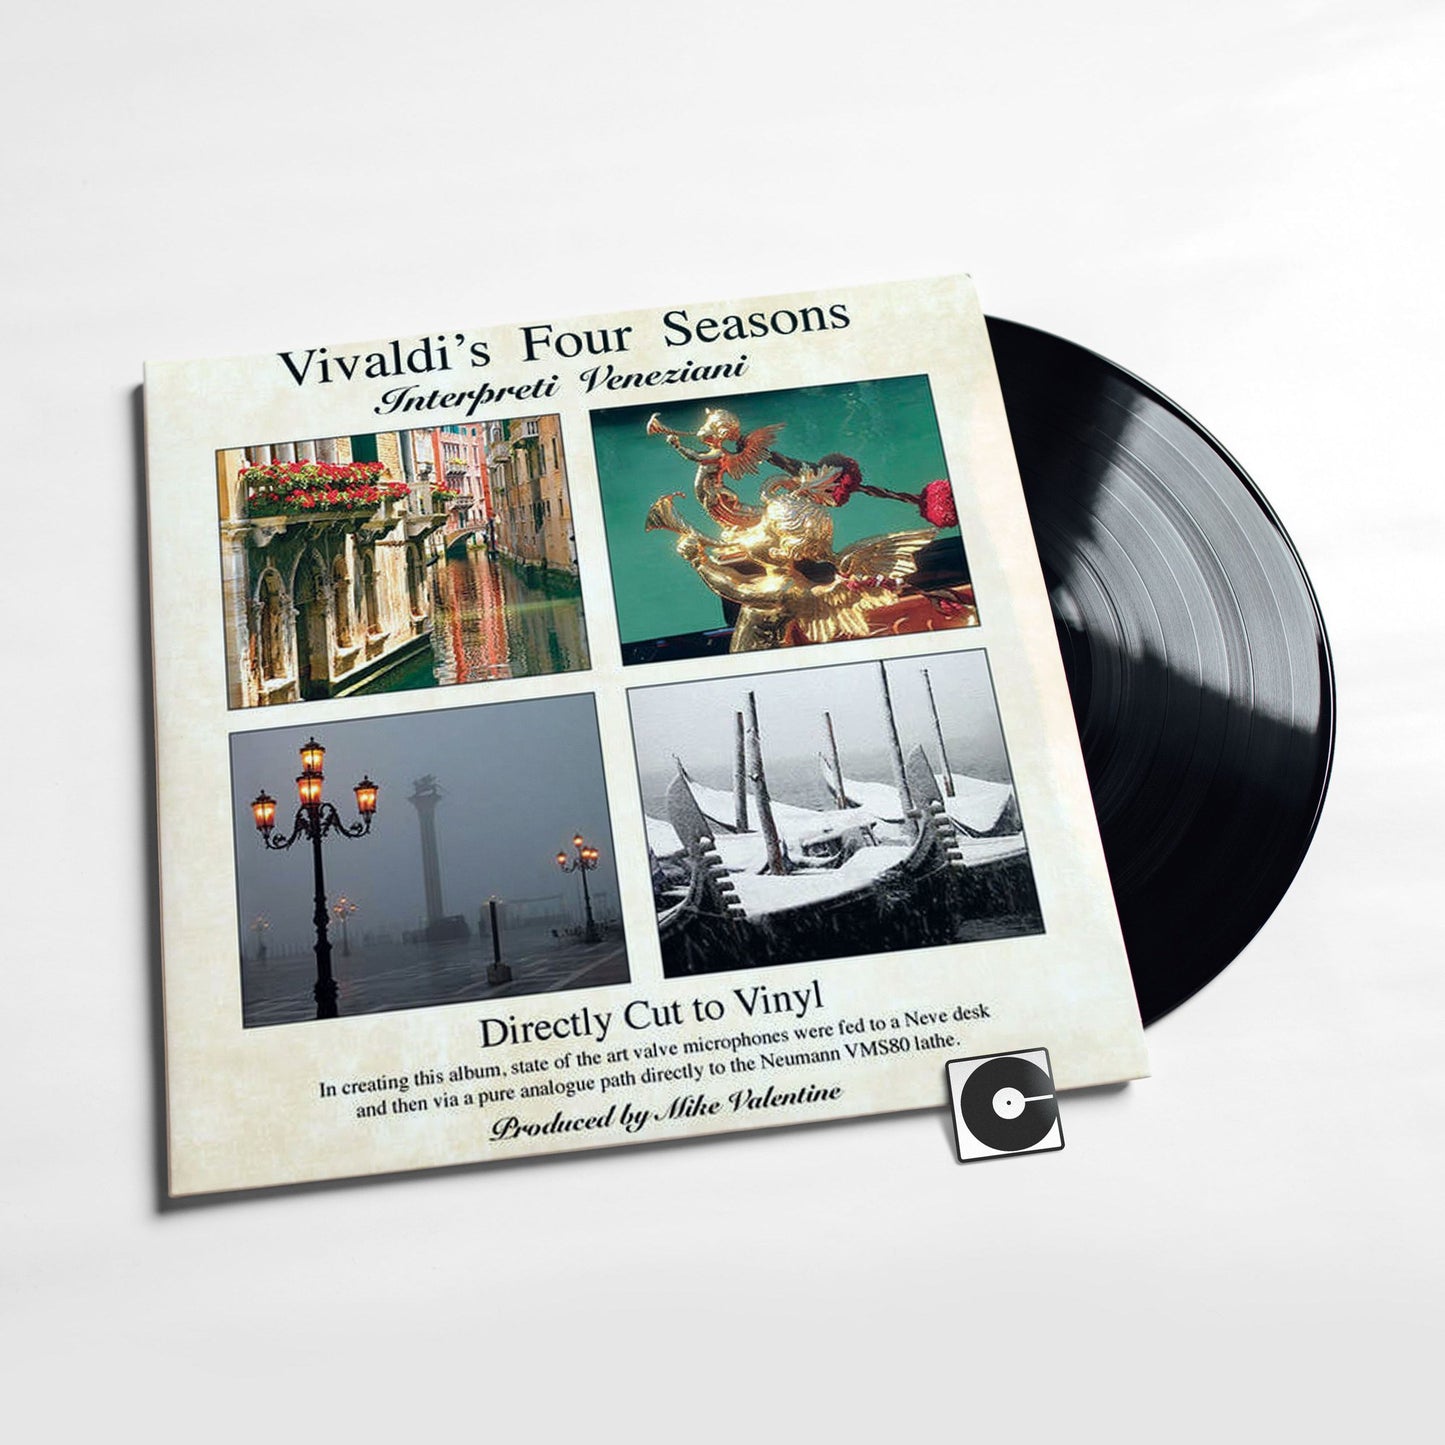 Vivaldi - "The Four Seasons" Analogue Productions